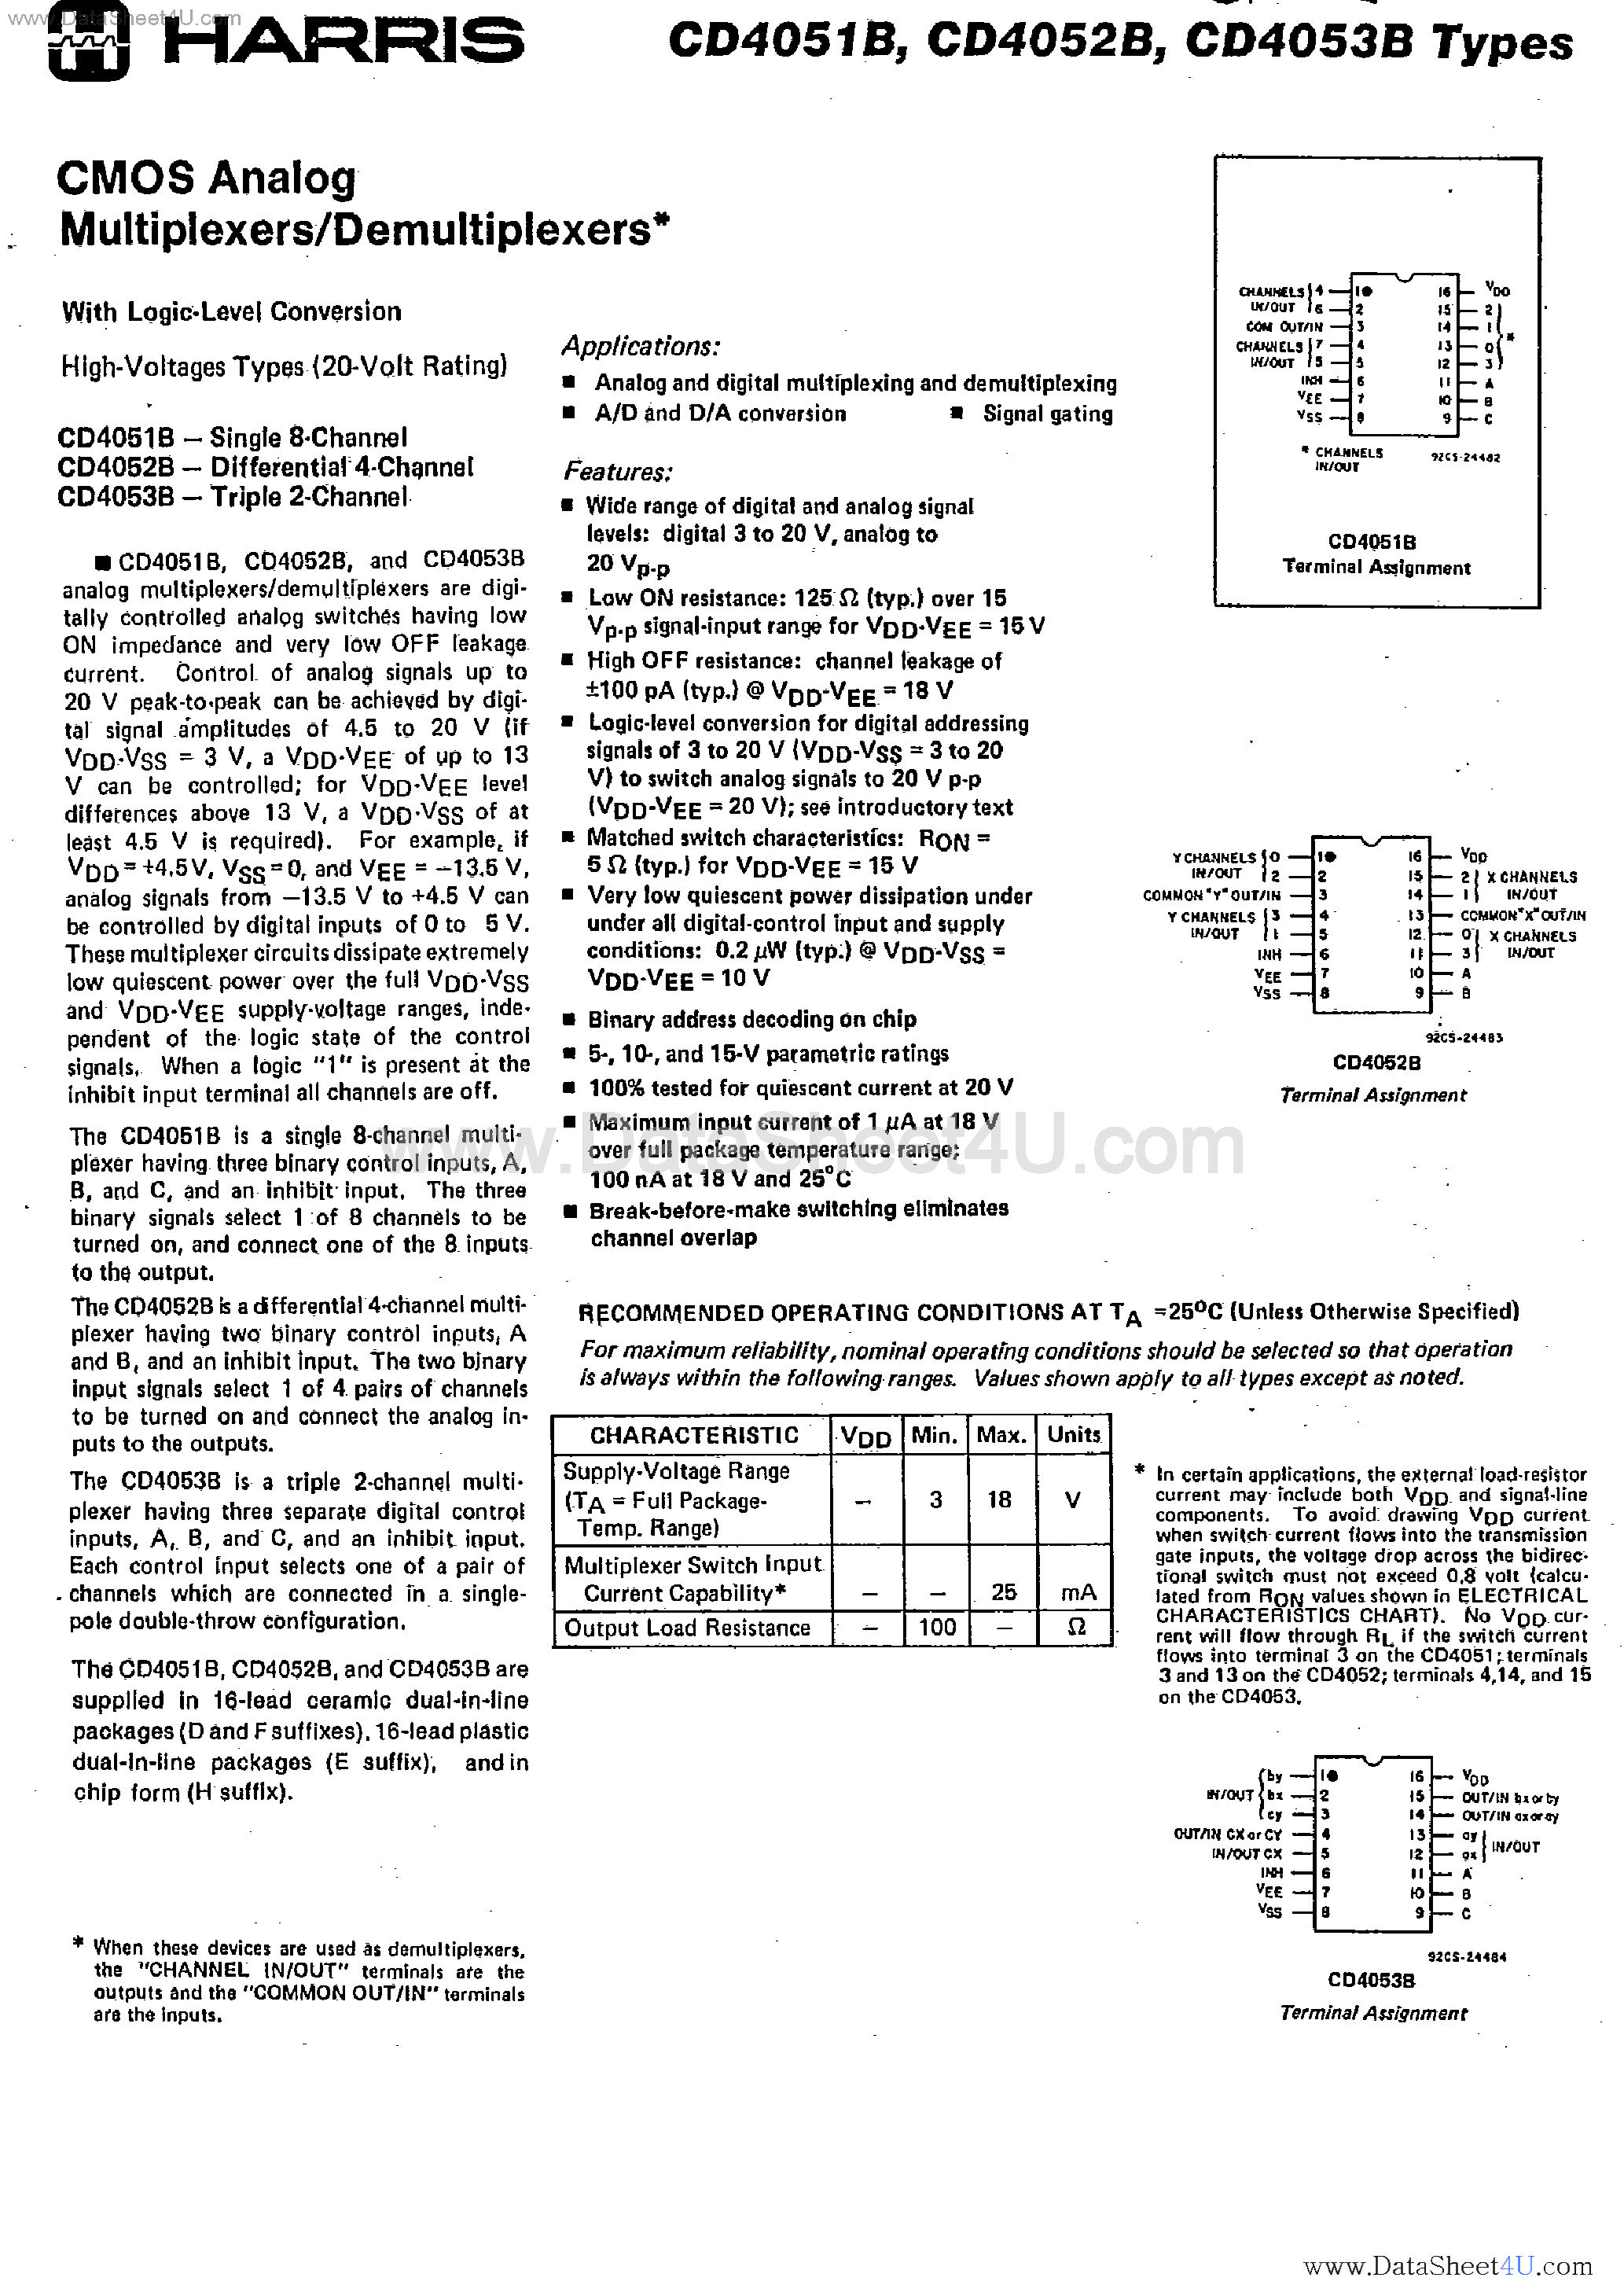 Datasheet CD4051B - (CD4051BE - CD4053BE) CMOS Analog Multiplexers / Demultiplexers page 1